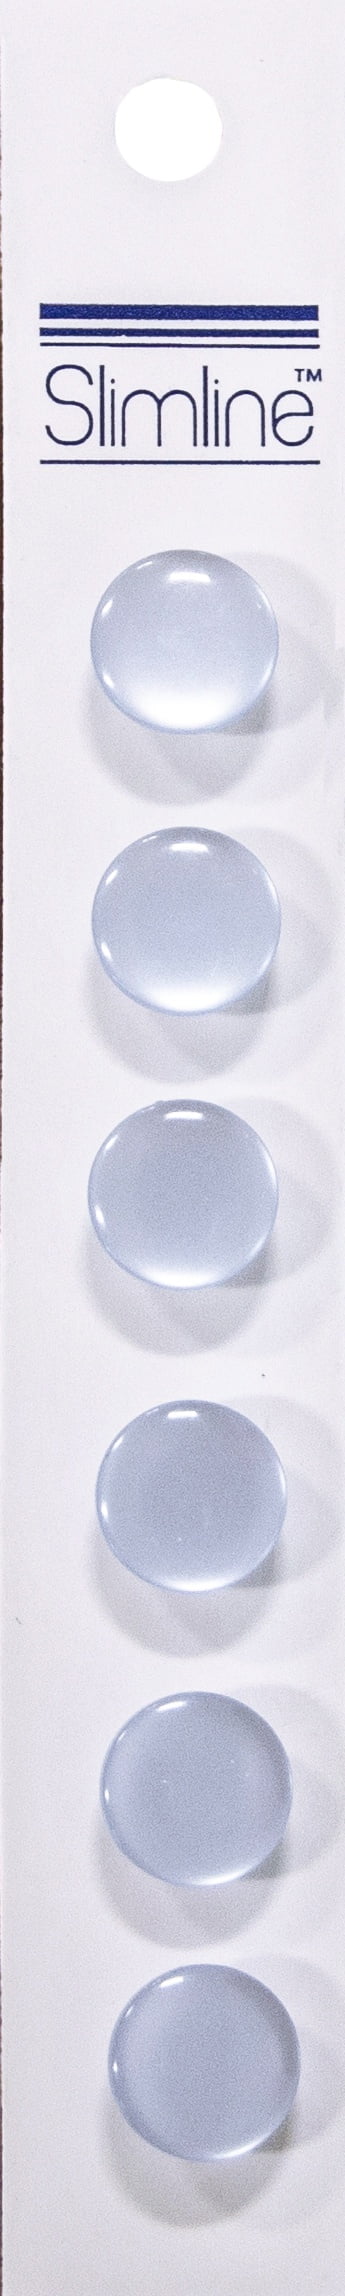 Slimline Buttons -Royal Blue 4-Hole 5/8 4/Pkg